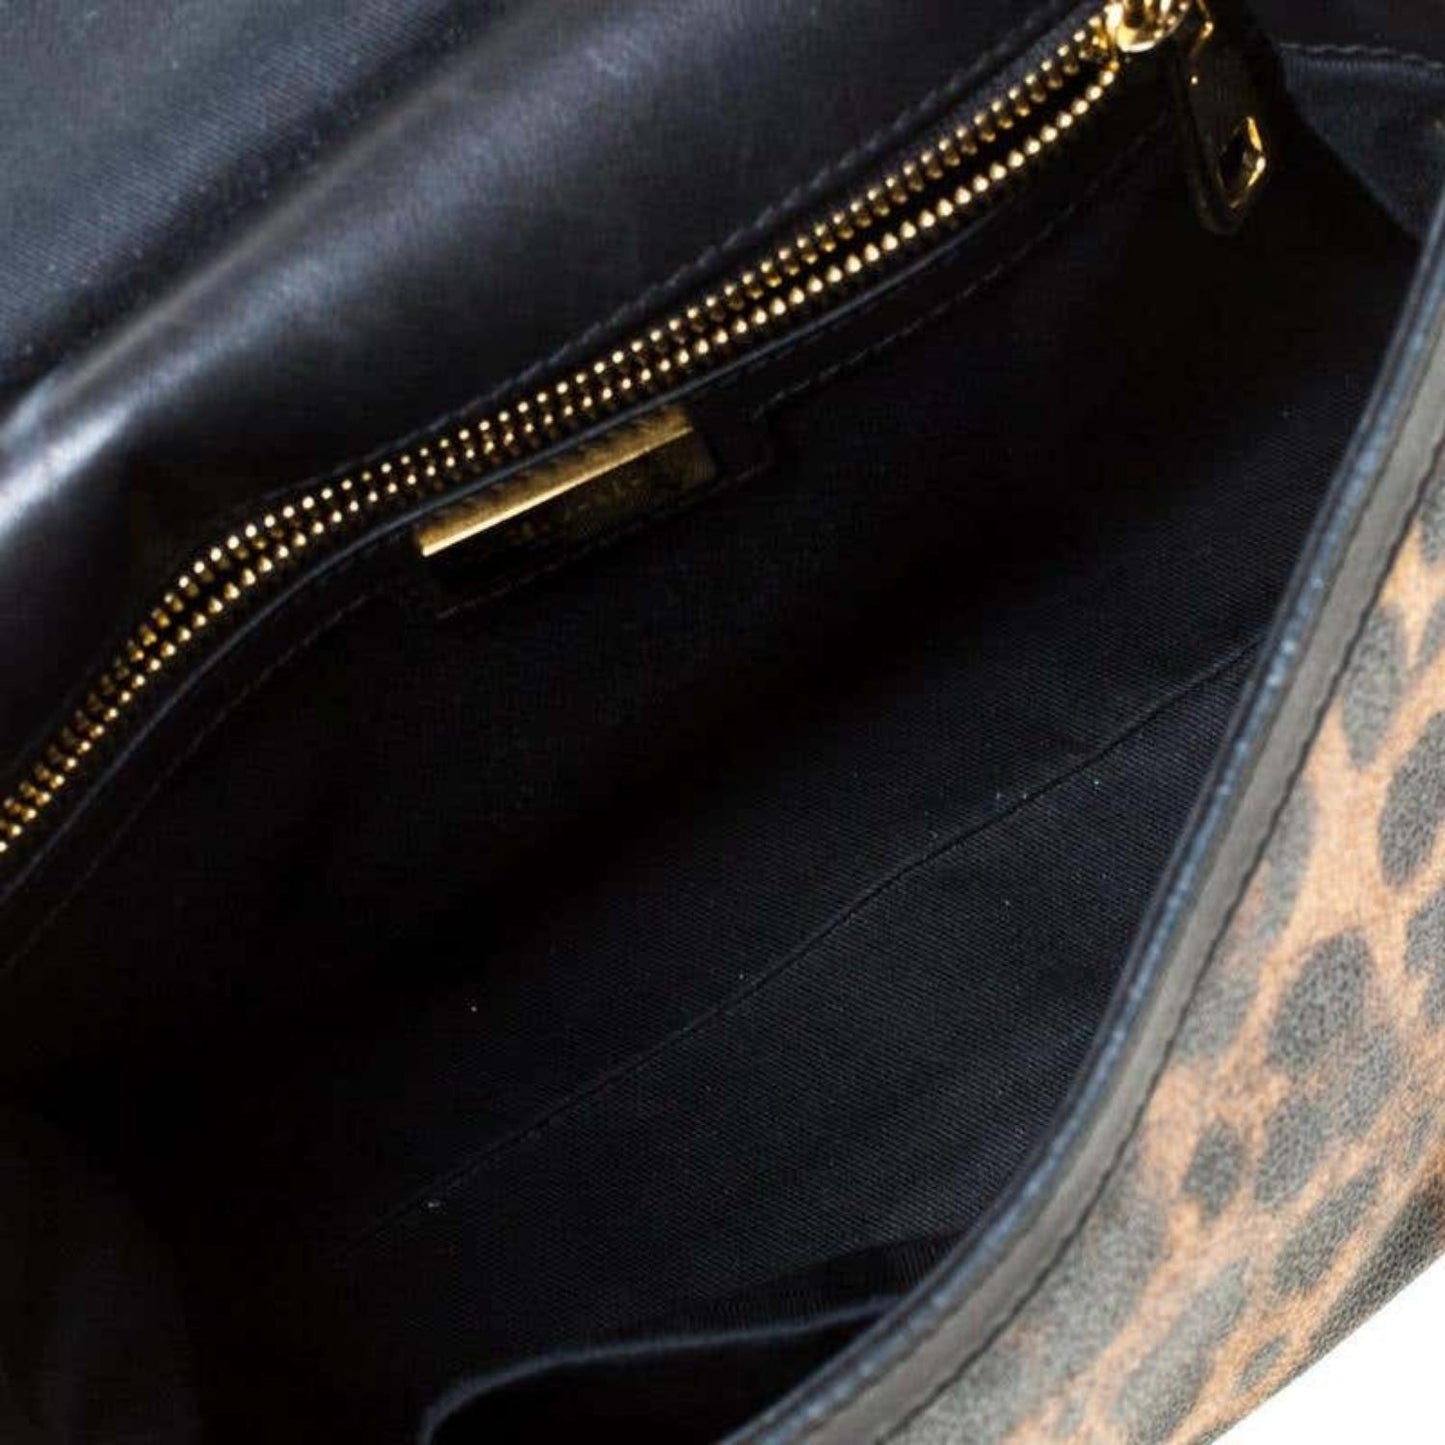 Leopard Print Leather MIni Miss Sicily Top Handle Bag